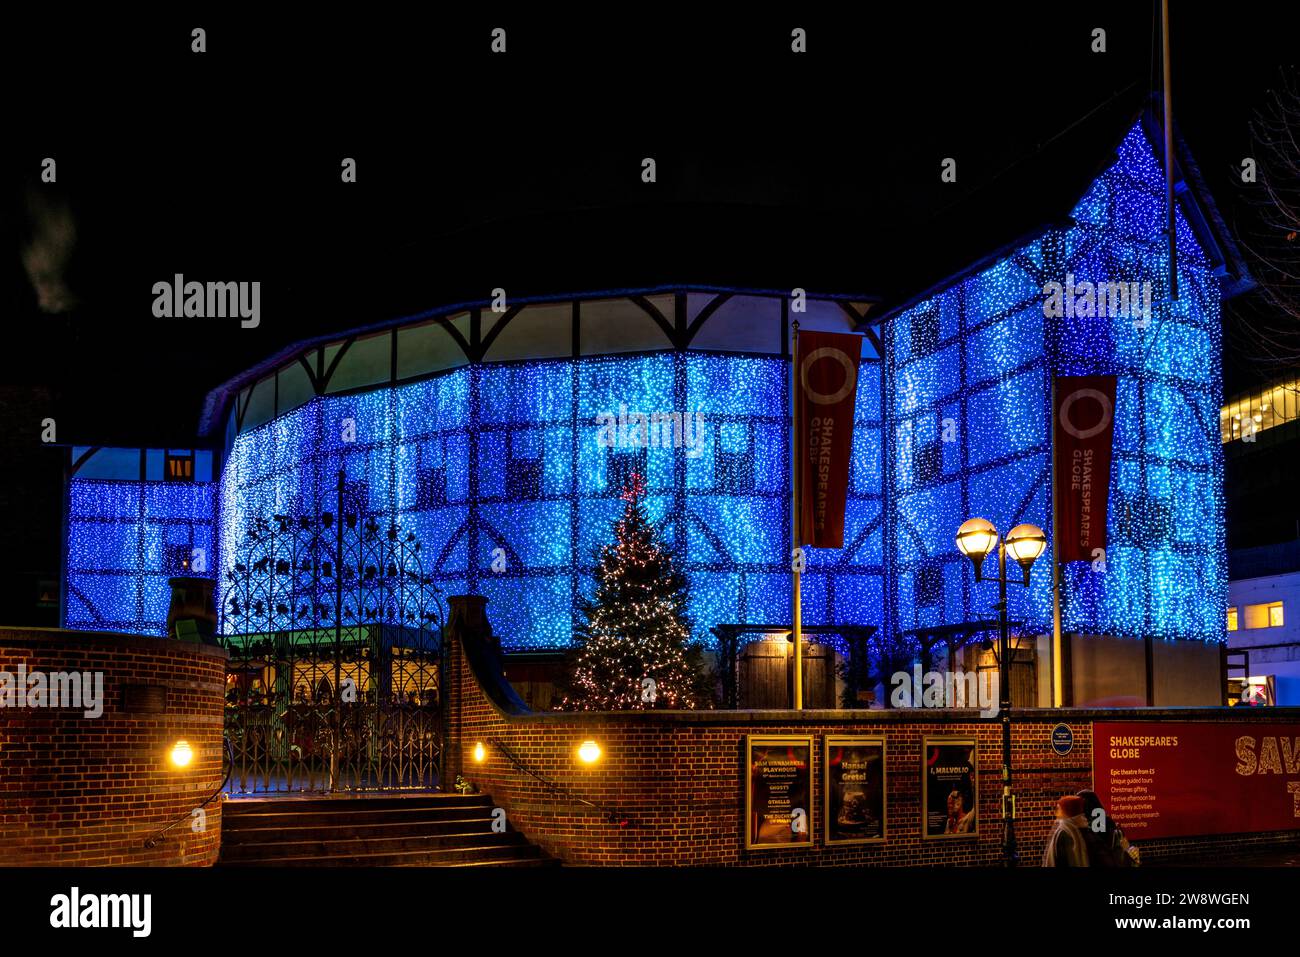 El Teatro Globo de Shakespeare iluminado en la noche, Londres, Reino Unido Foto de stock